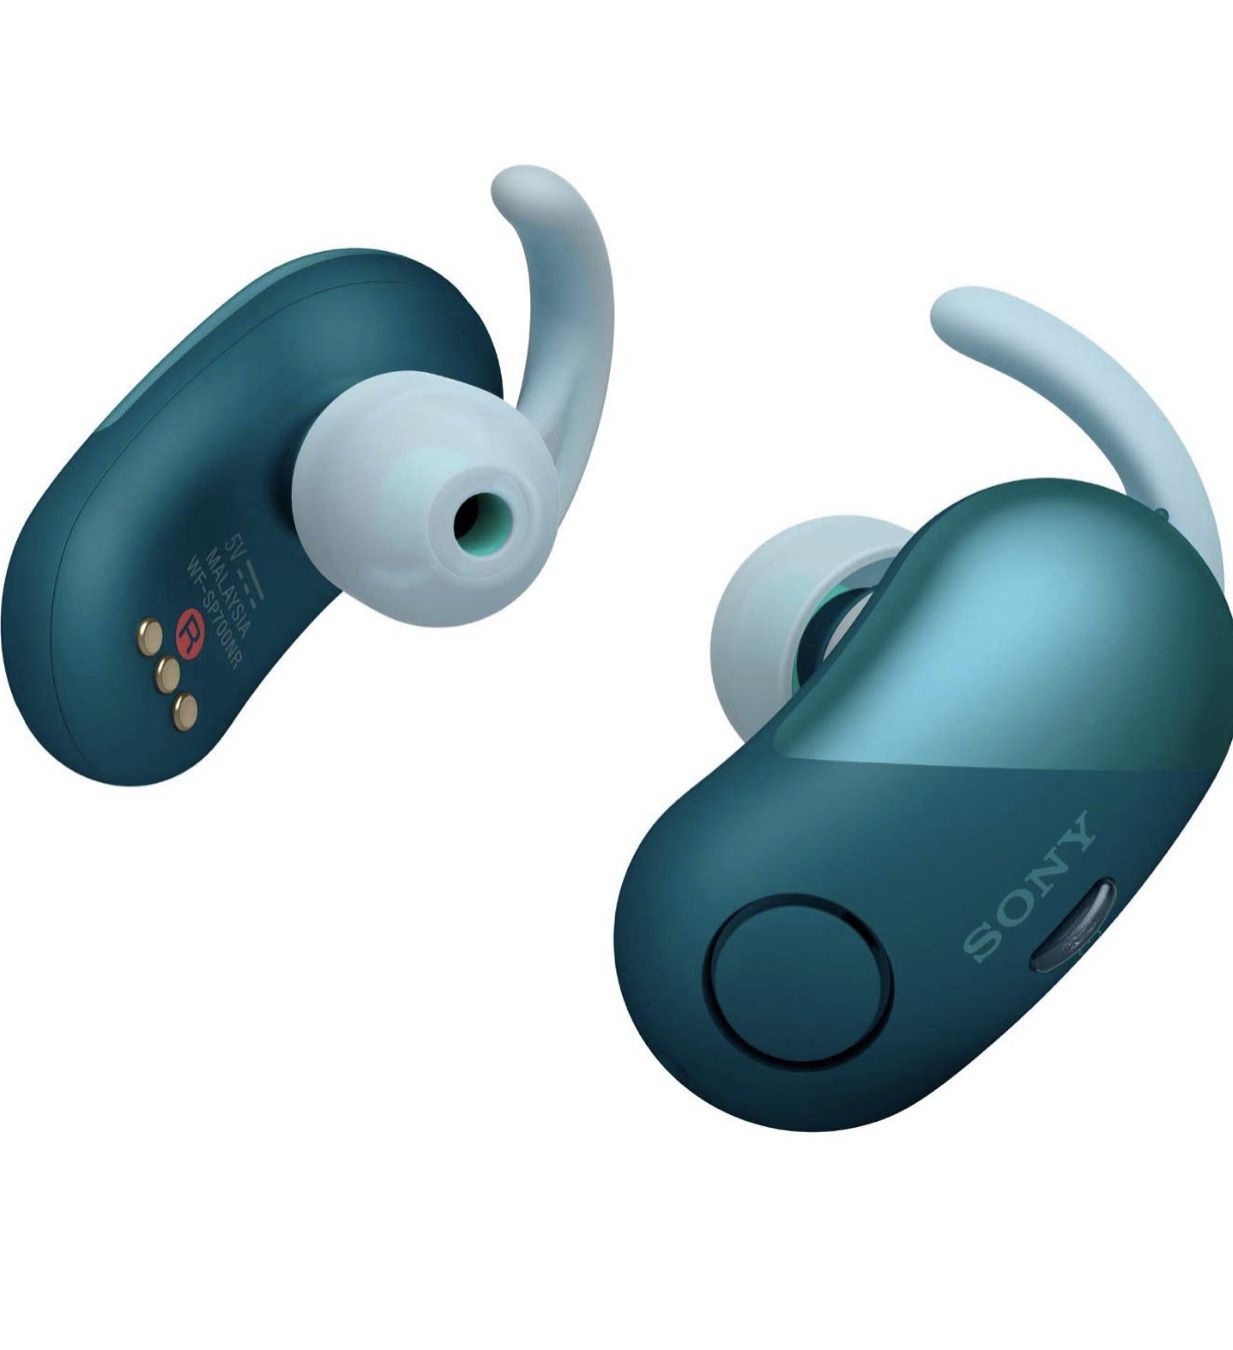 NEW Sony WFSP700n Bluetooth headphones wireless earbuds Noise Canceling